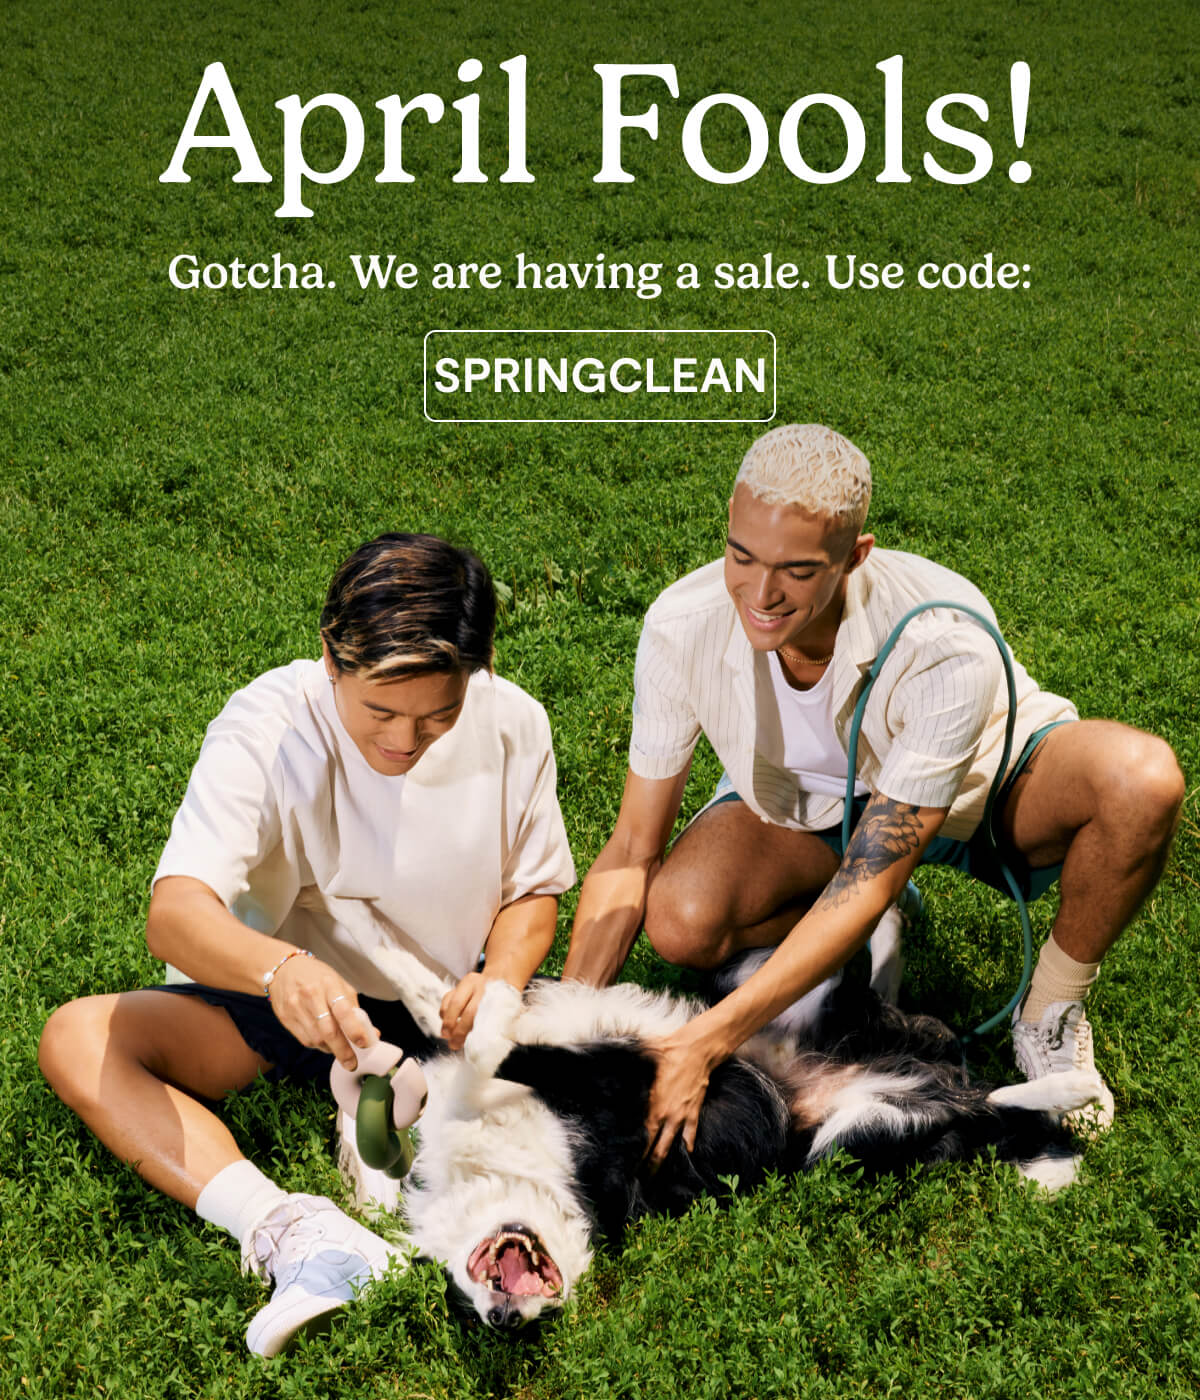 April Fools! Gotcha. We are having a sale. Use code: SPRINGCLEAN